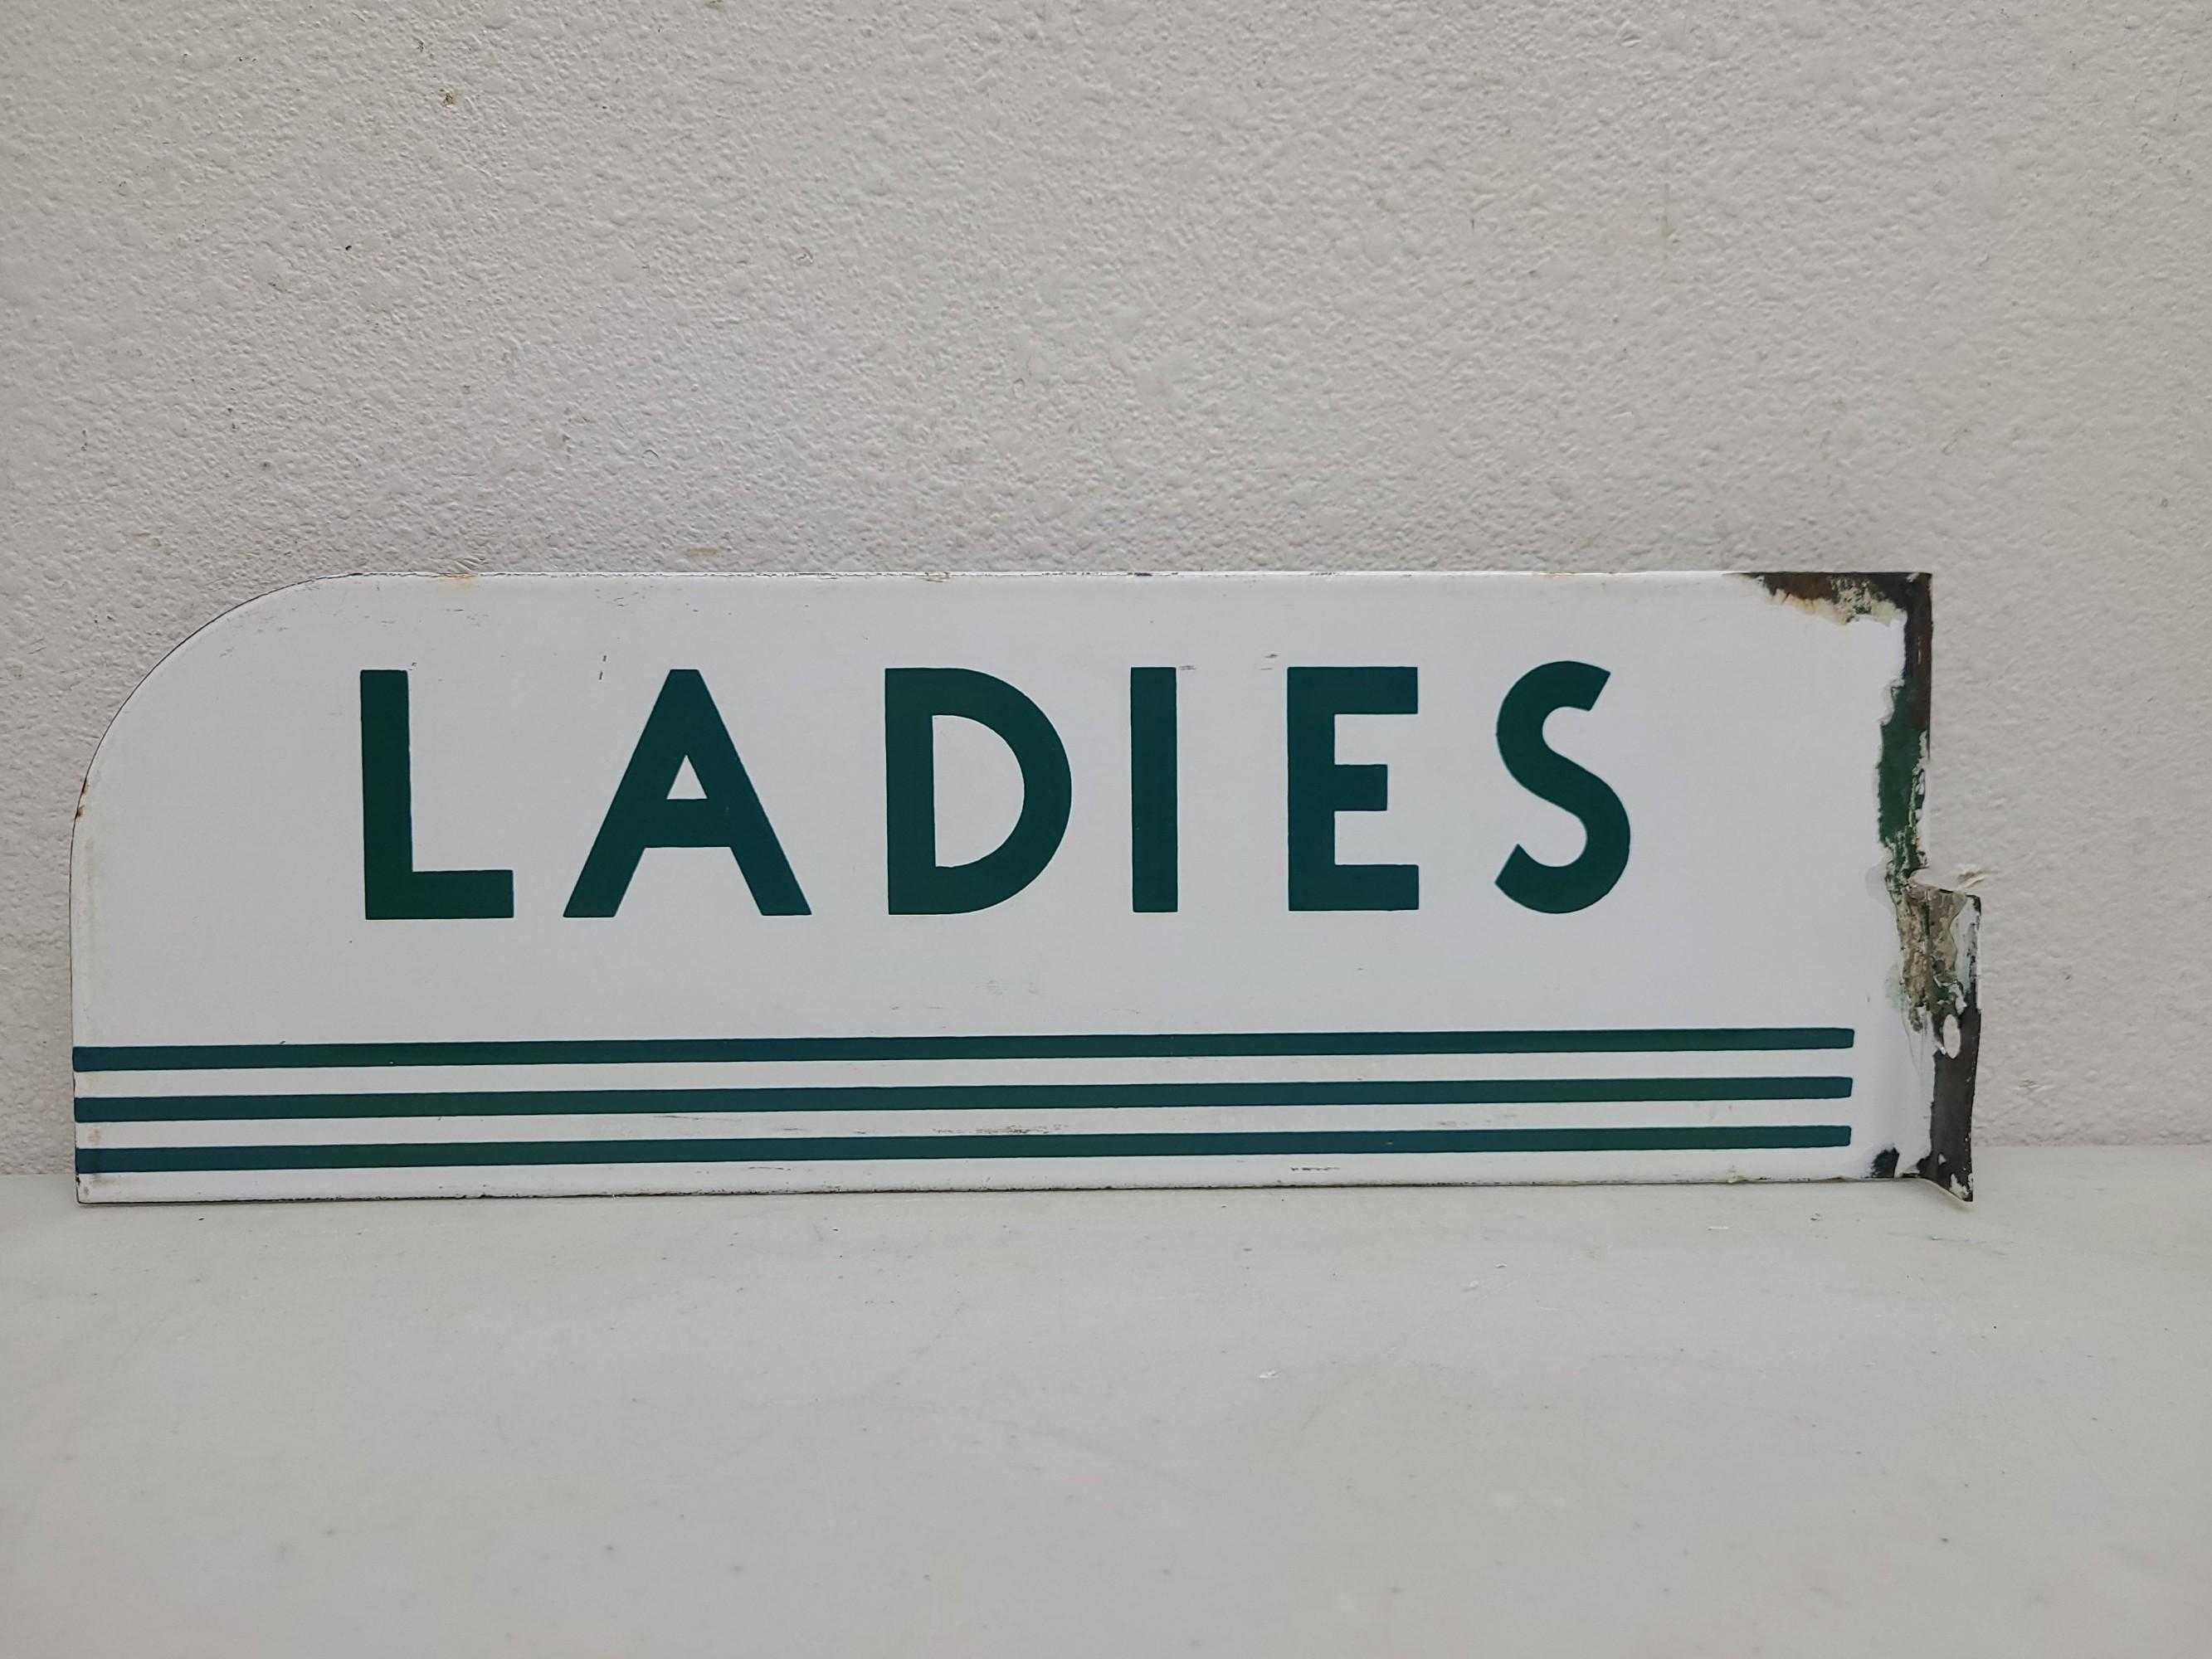 Pair DSP Sinclair Men & Ladies Gas Station Bathroom Signs